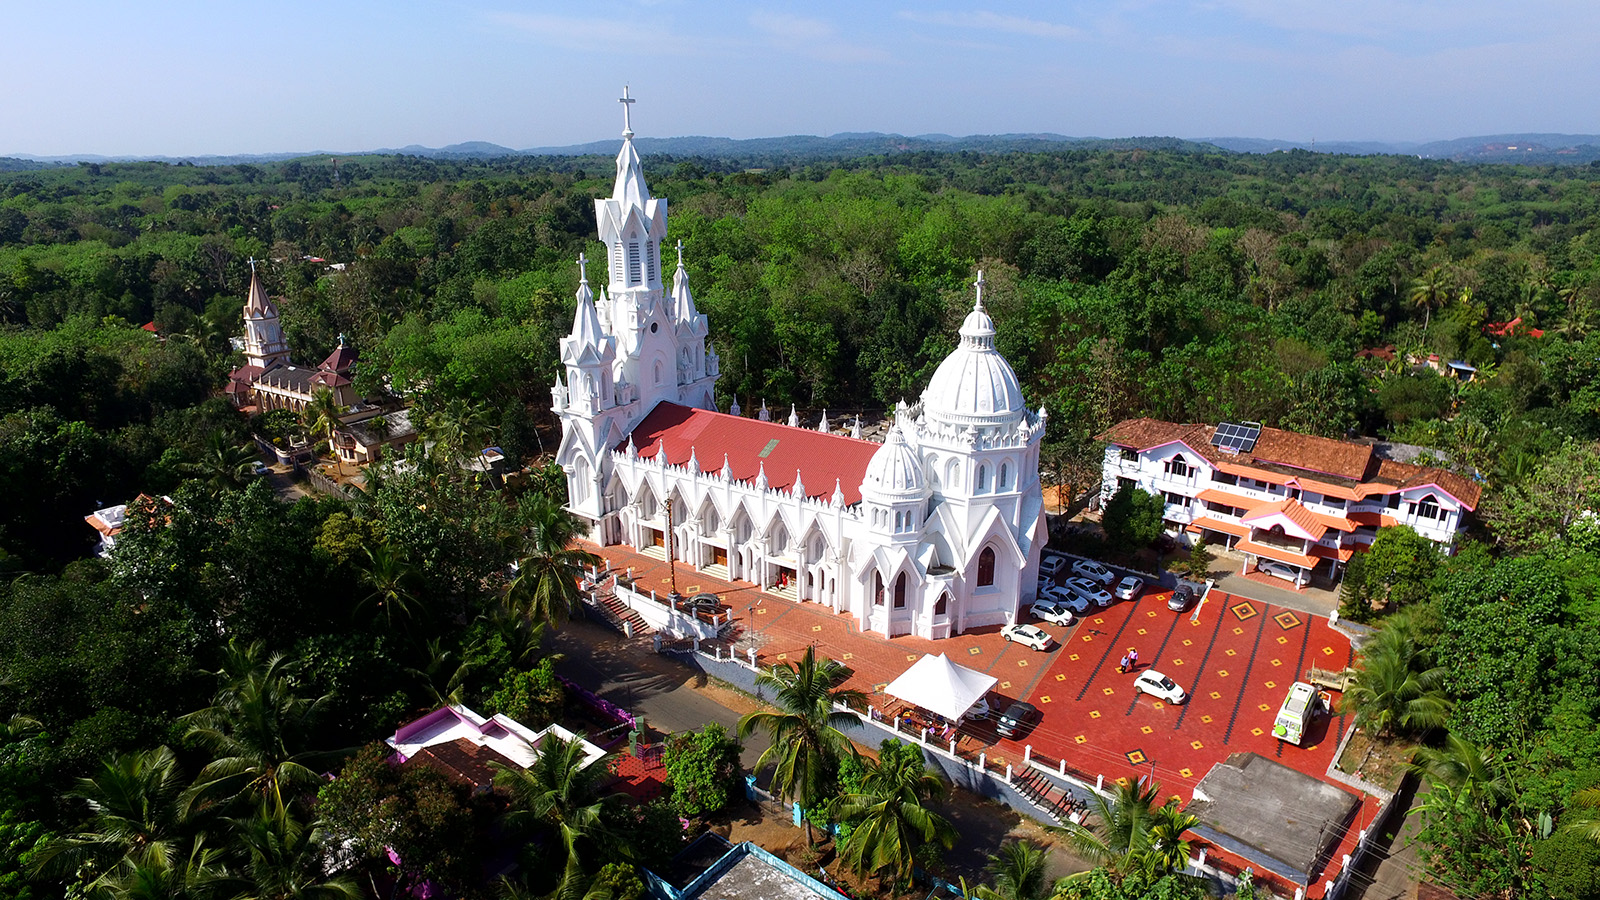 Architect and ‘Mosque Man’ Govindan Gopalakrishnan has helped renovate the St. George Orthodox Church in Kerala, southern India. (RNS photo/Priyadarshini Sen)